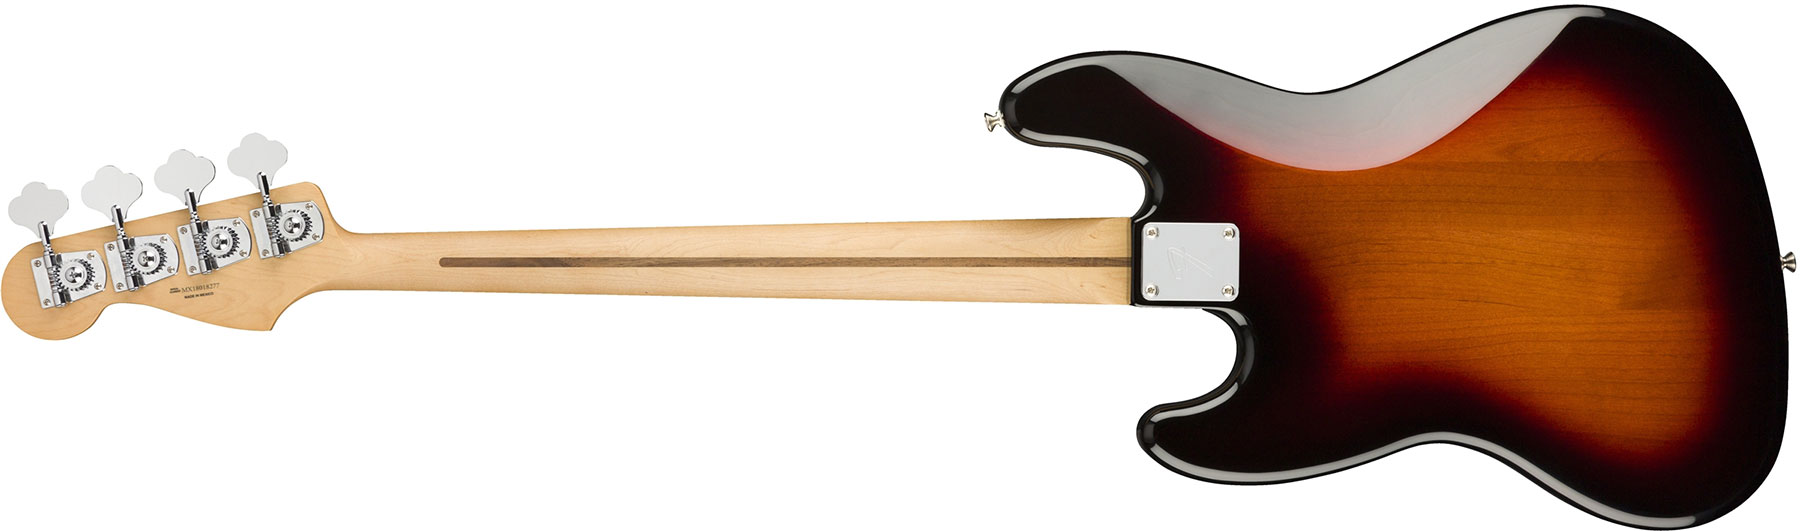 Fender Jazz Bass Player Mex Mn - 3-color Sunburst - Basse Électrique Solid Body - Variation 1